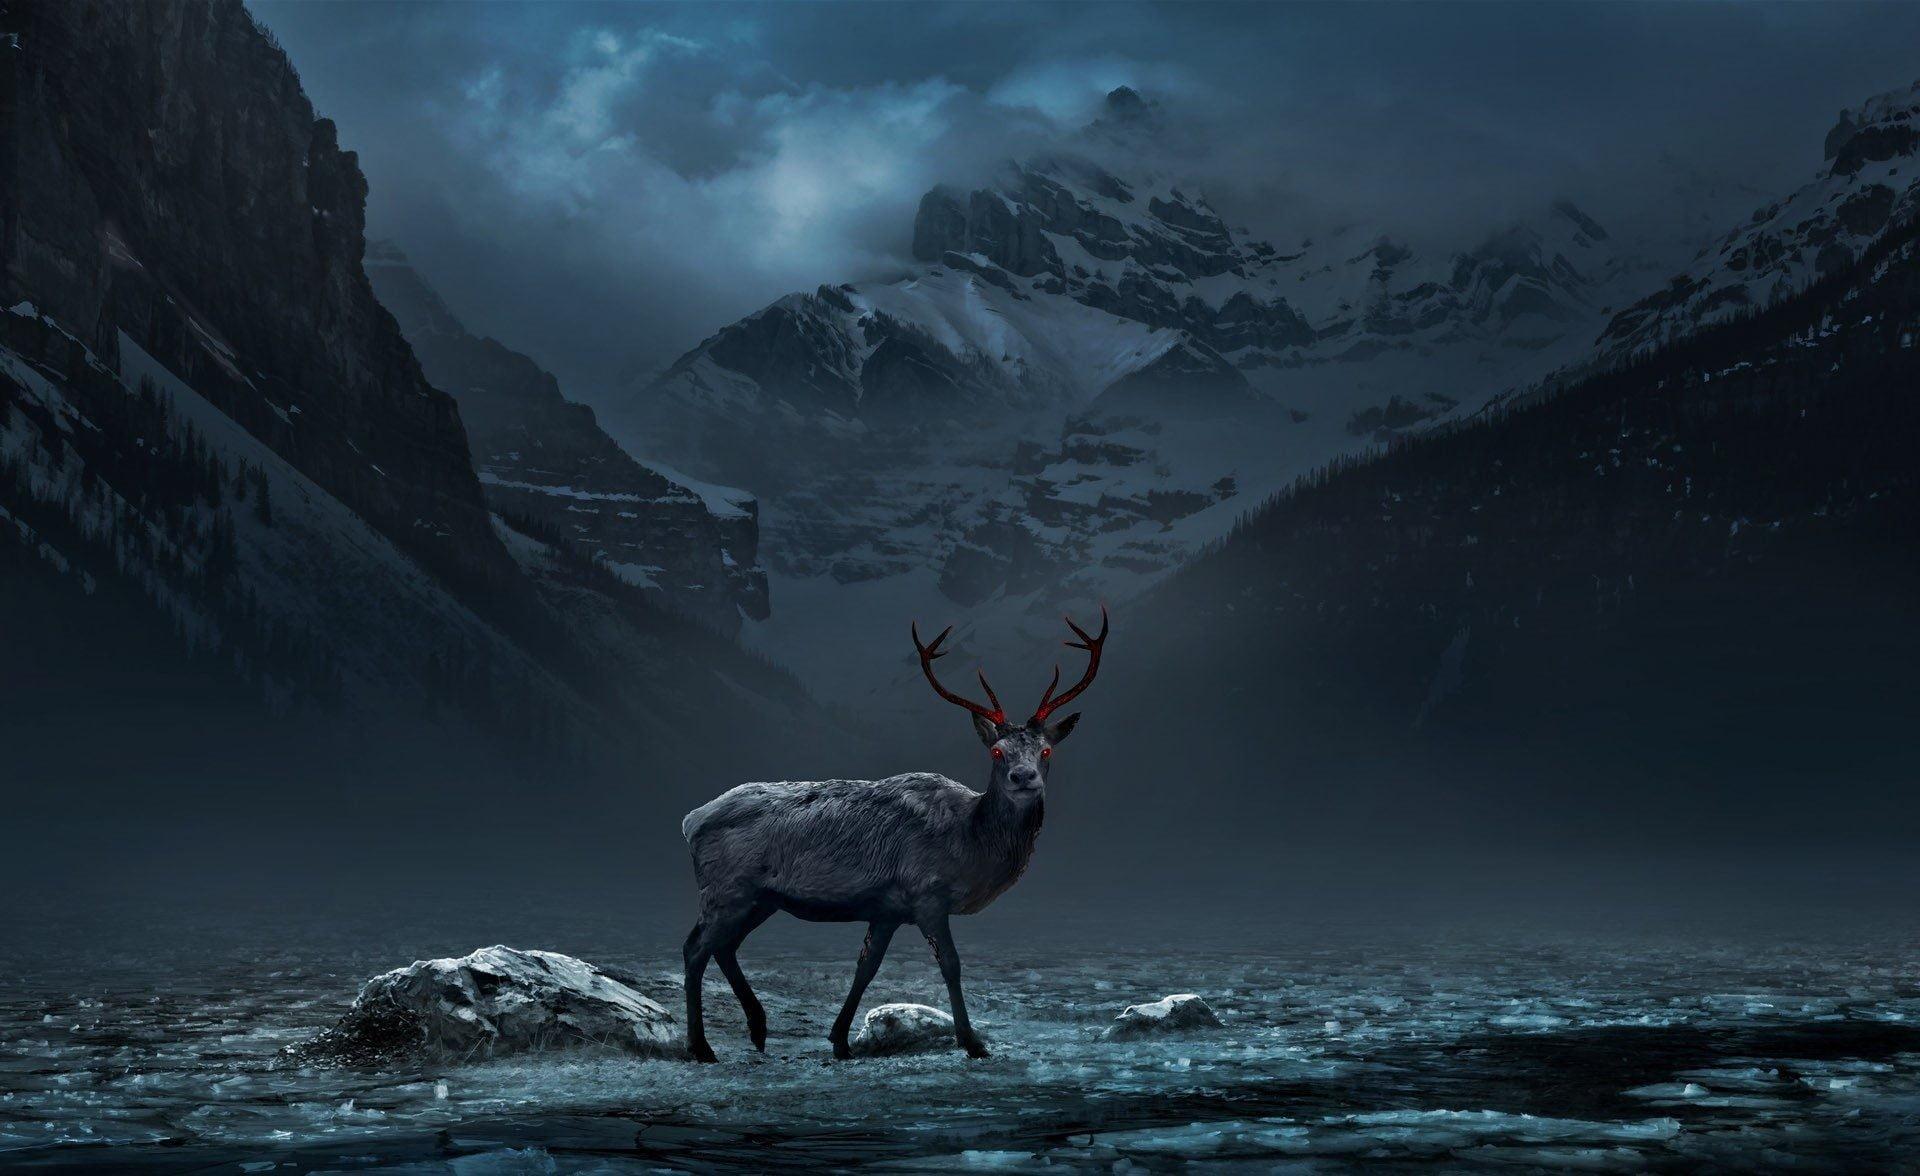 HD wallpaper: Deer on path, animal in forest, trees, fog, wildlife